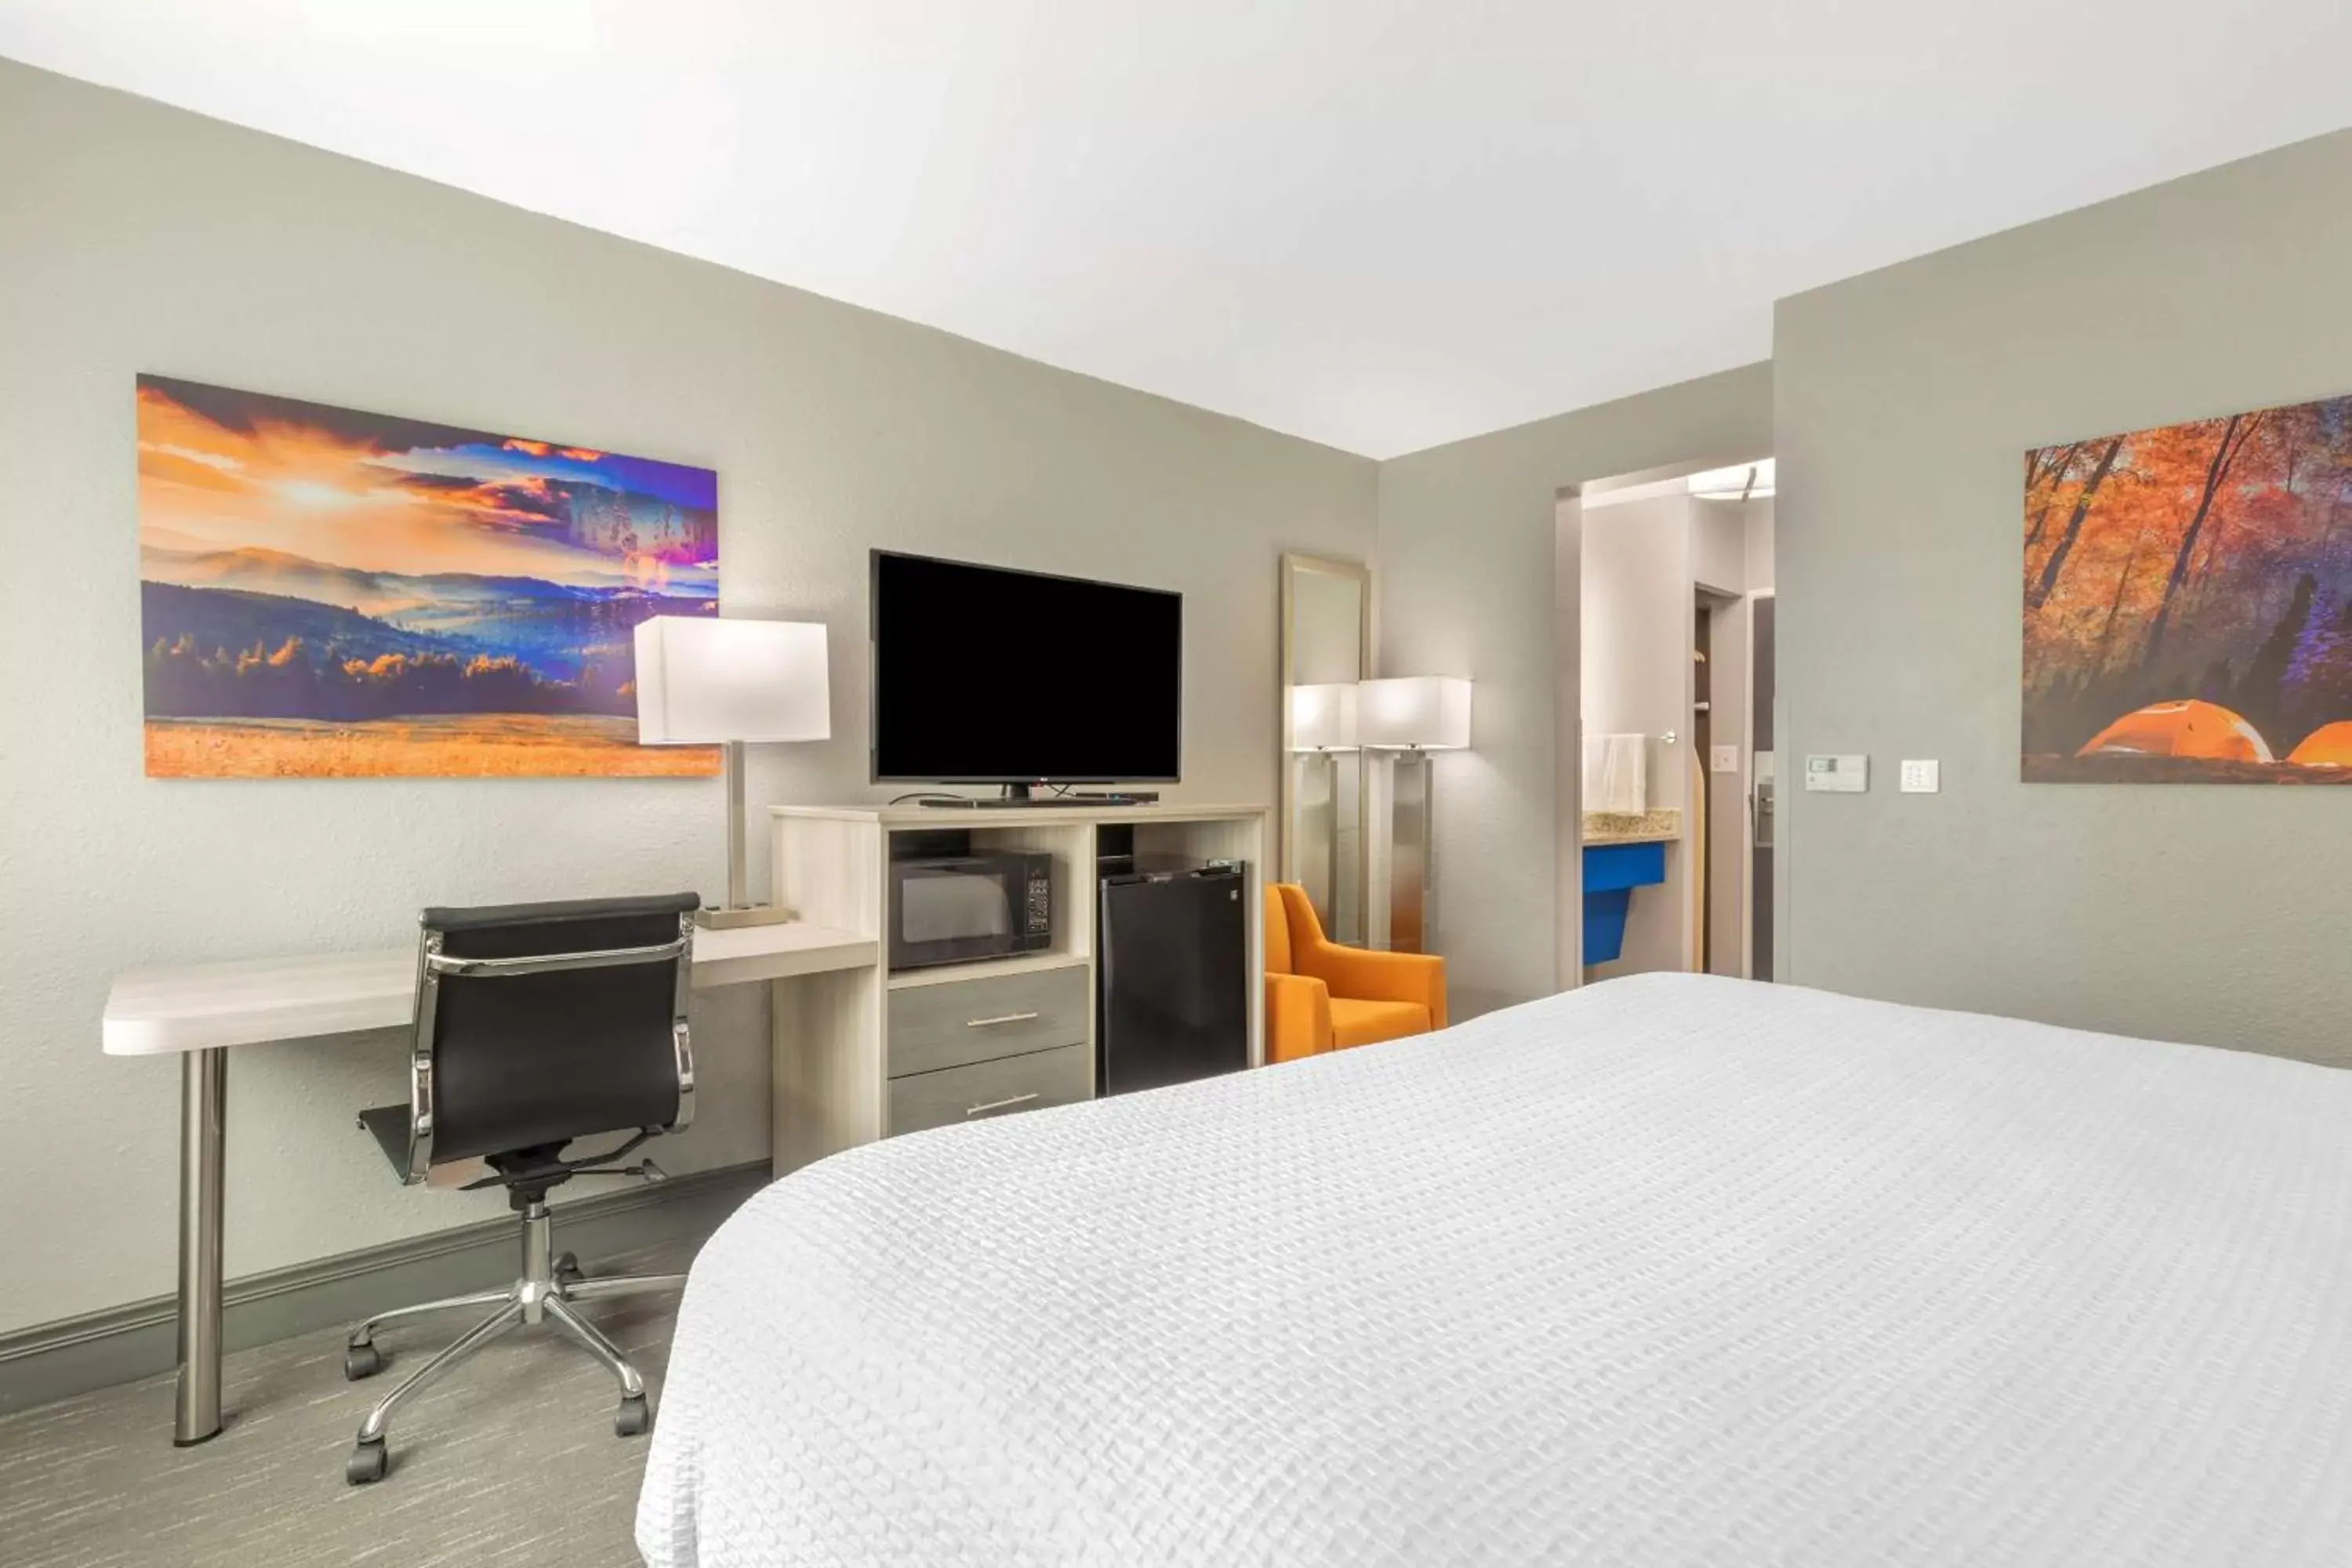 Bedroom, TV/Entertainment Center in Best Western Plus Magnolia Inn & Suites